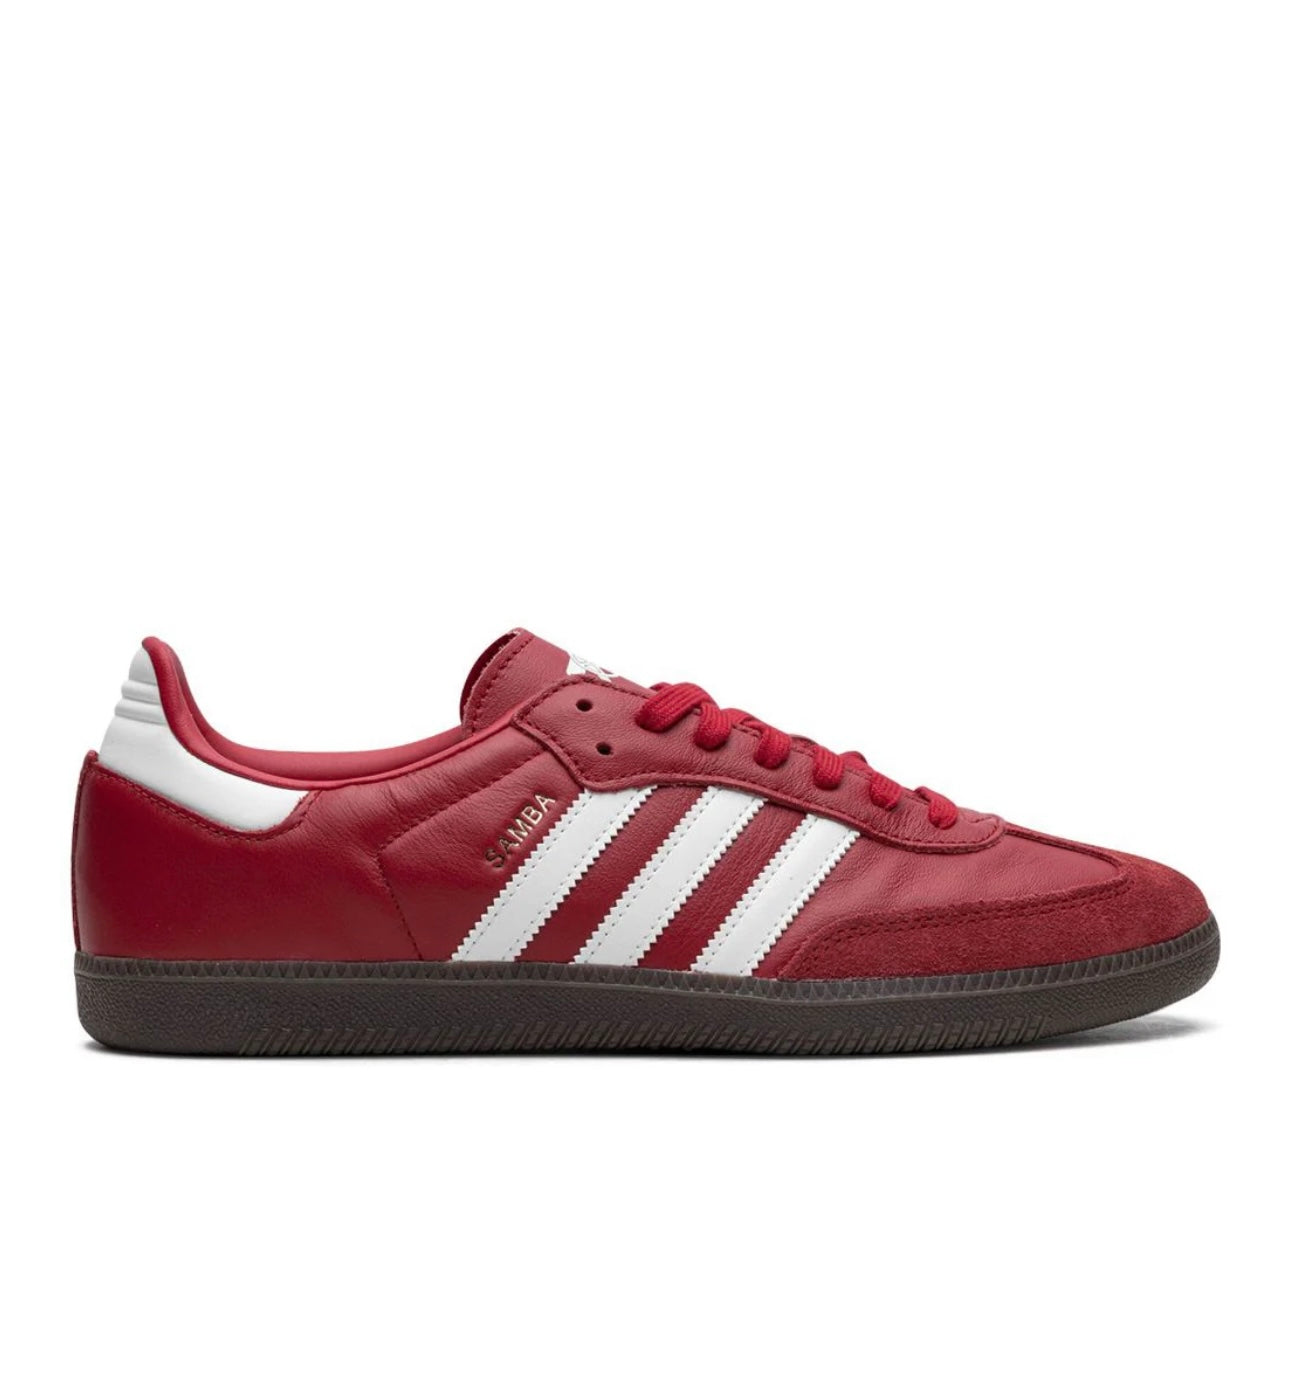 Adidas Samba red